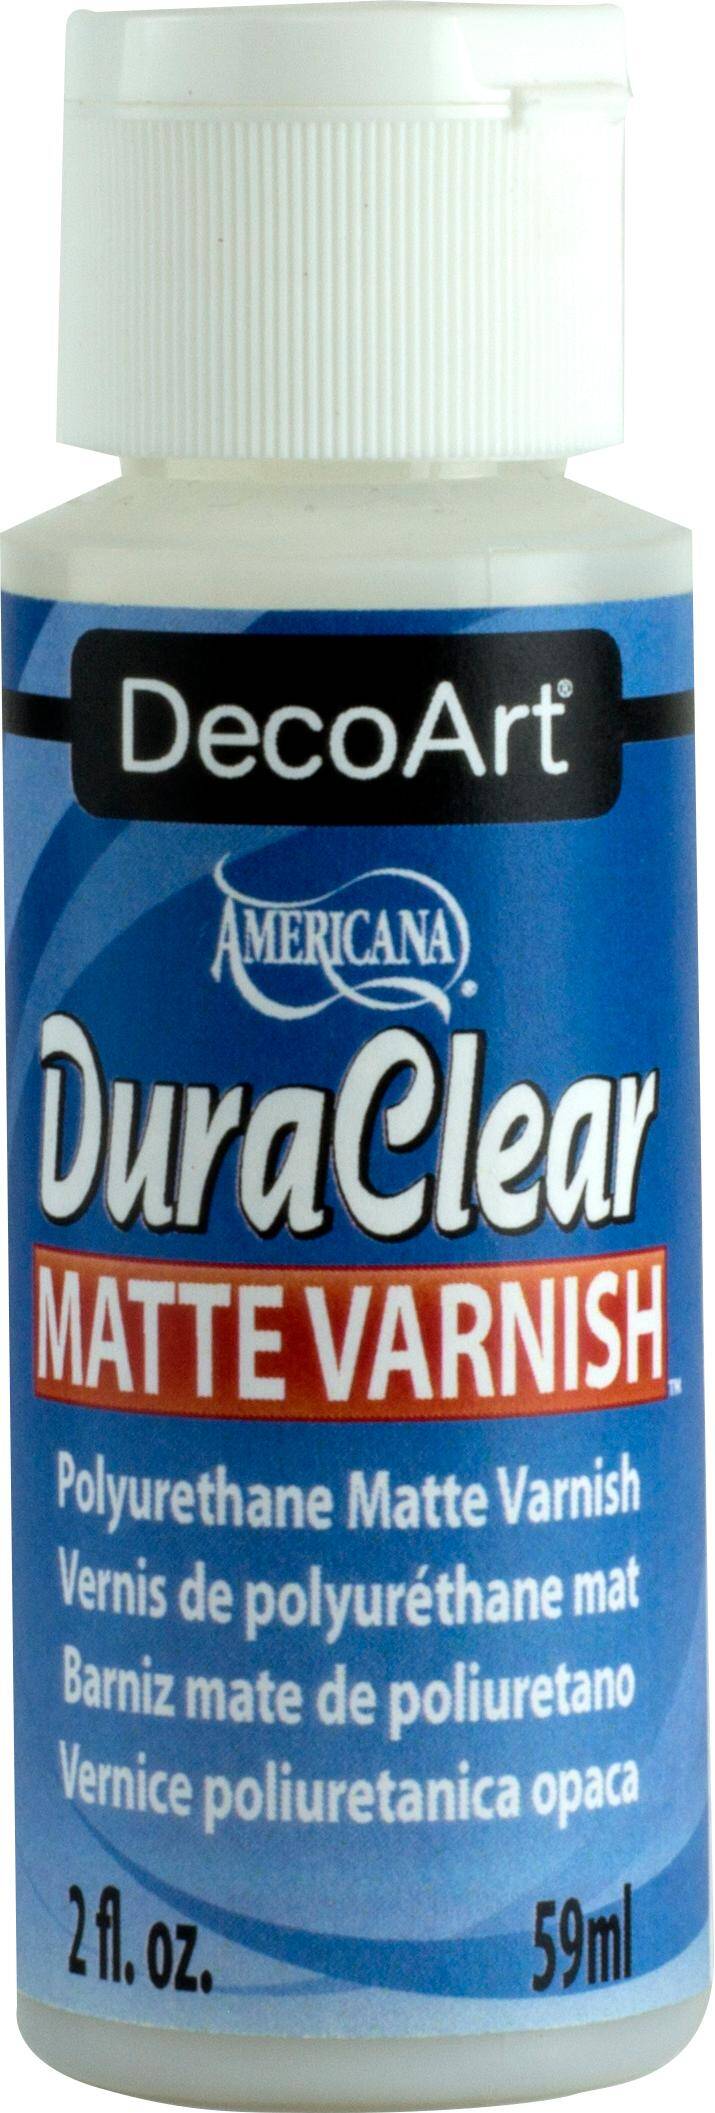 DuraClear Matte Varnish 59 ml